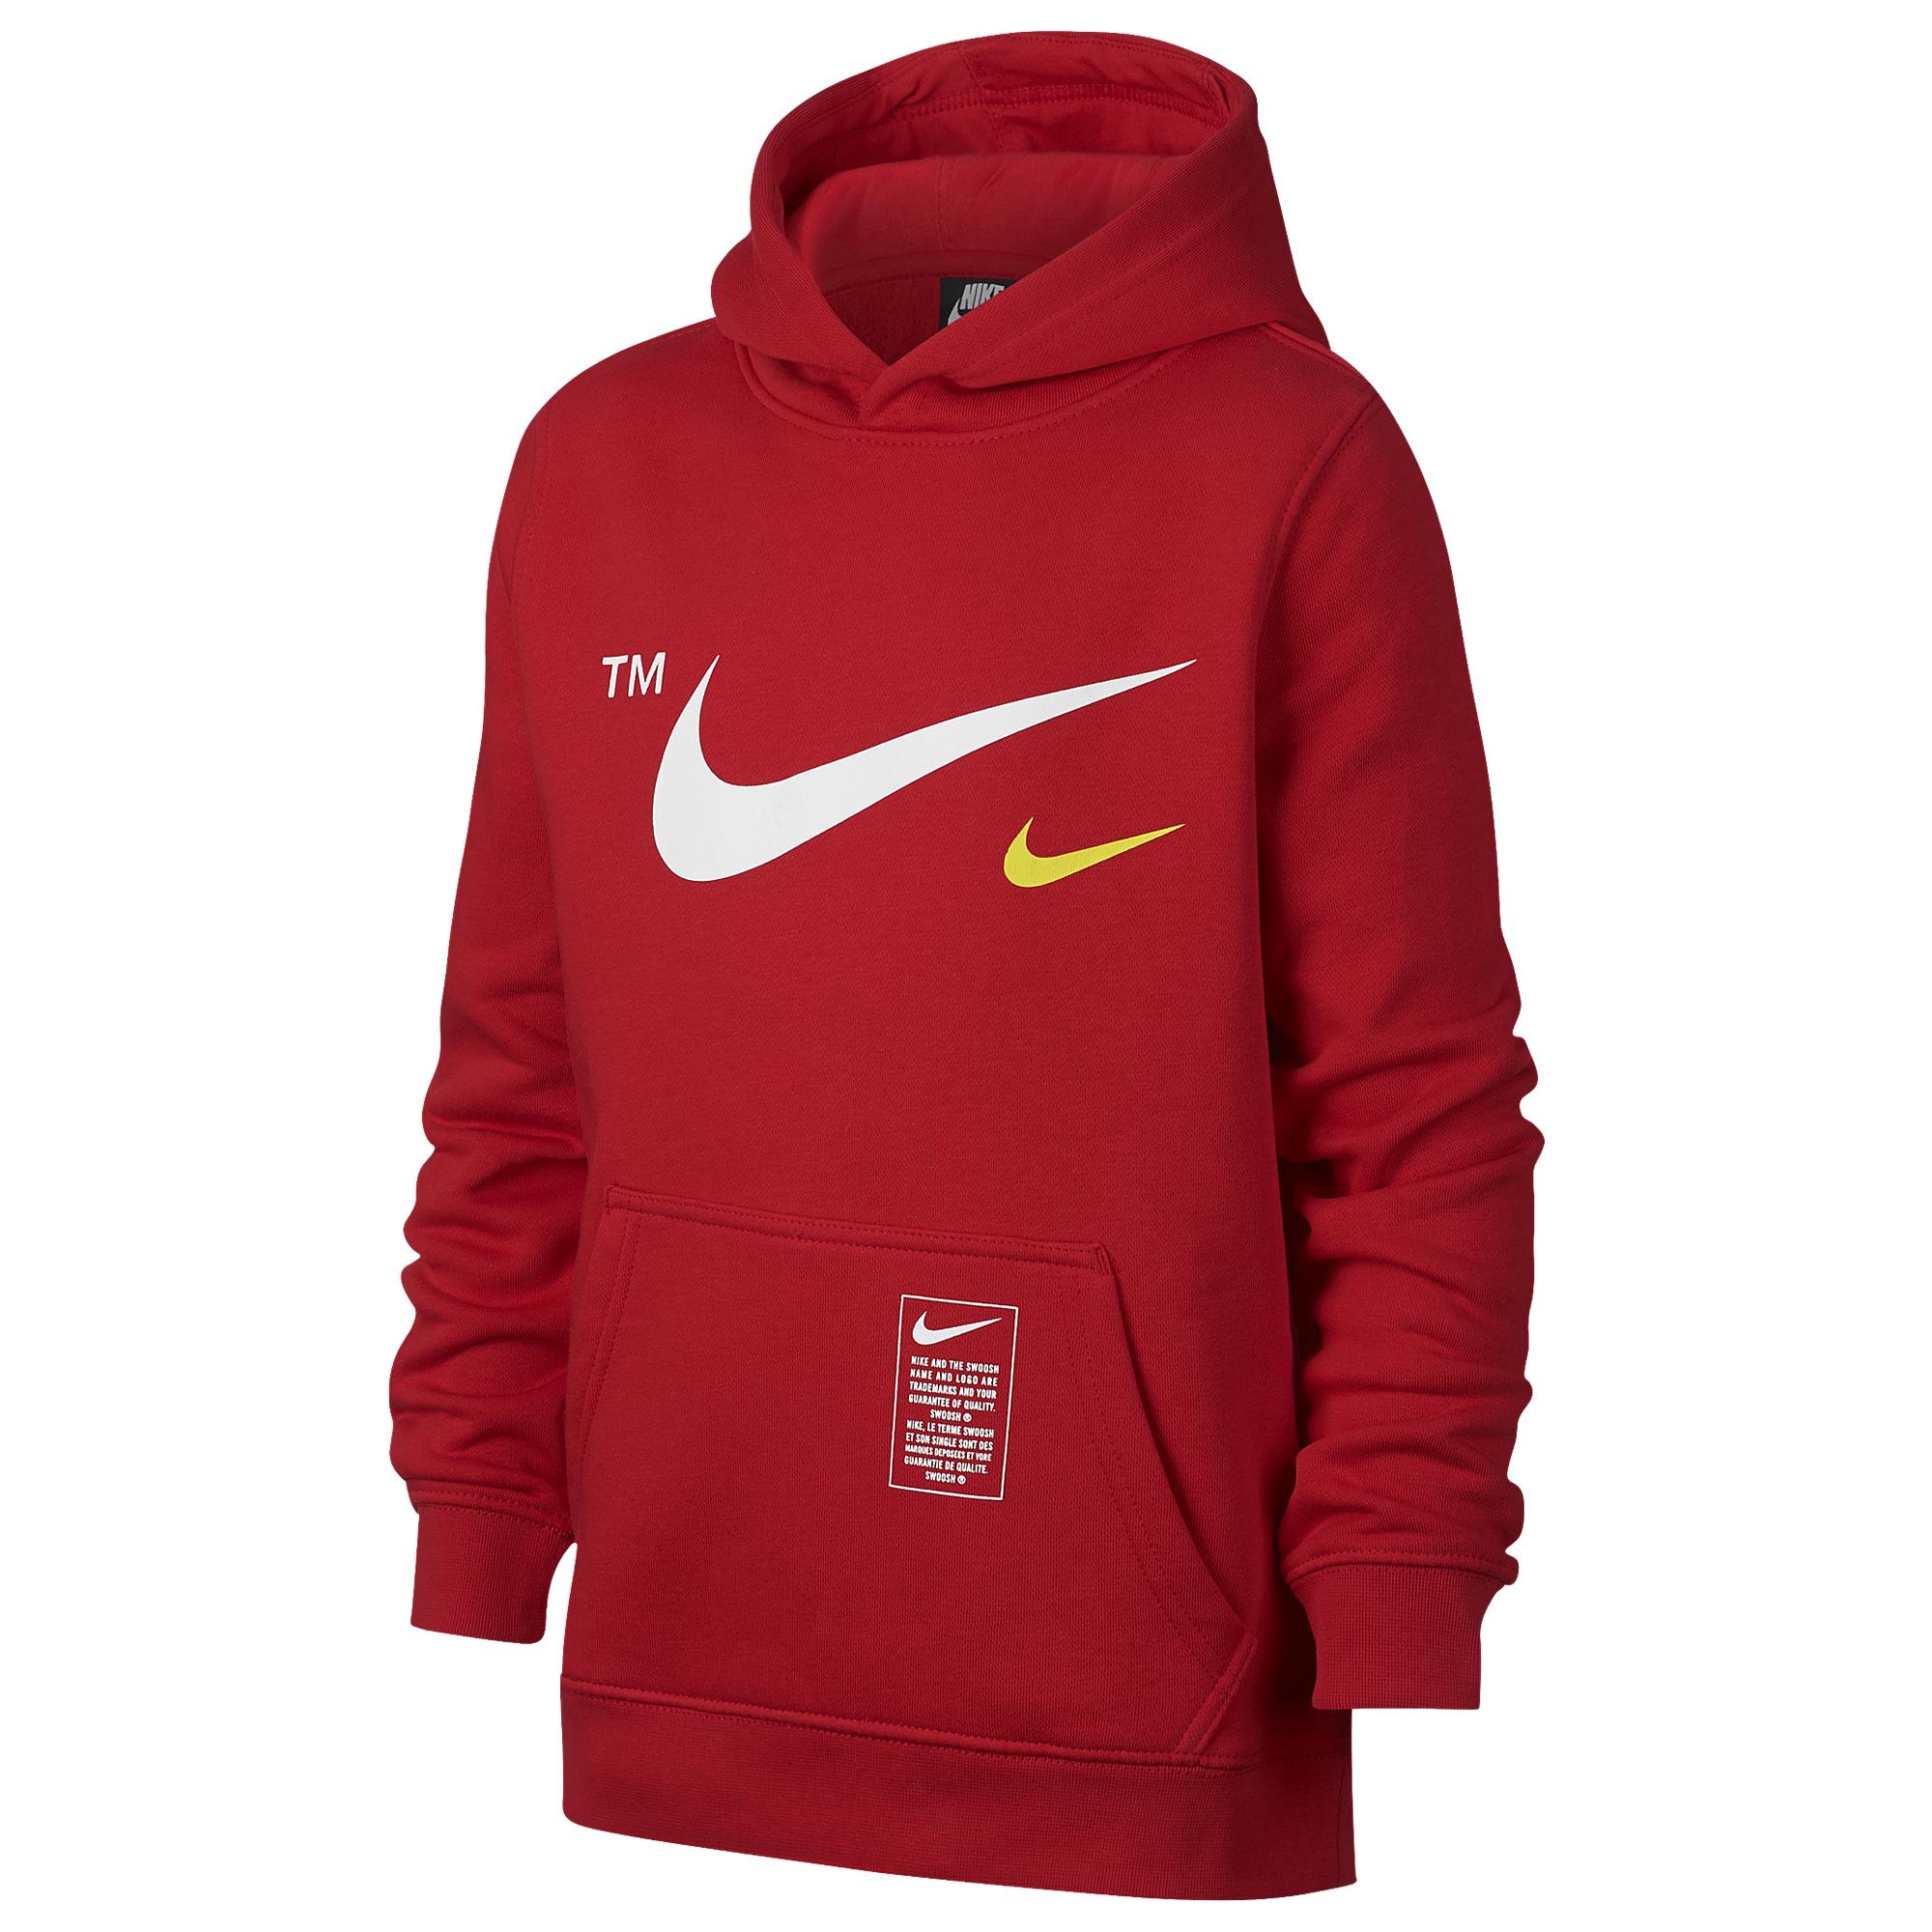 nike sportswear microbranding hoodie, Off 61%, sivasotokurtarma.com